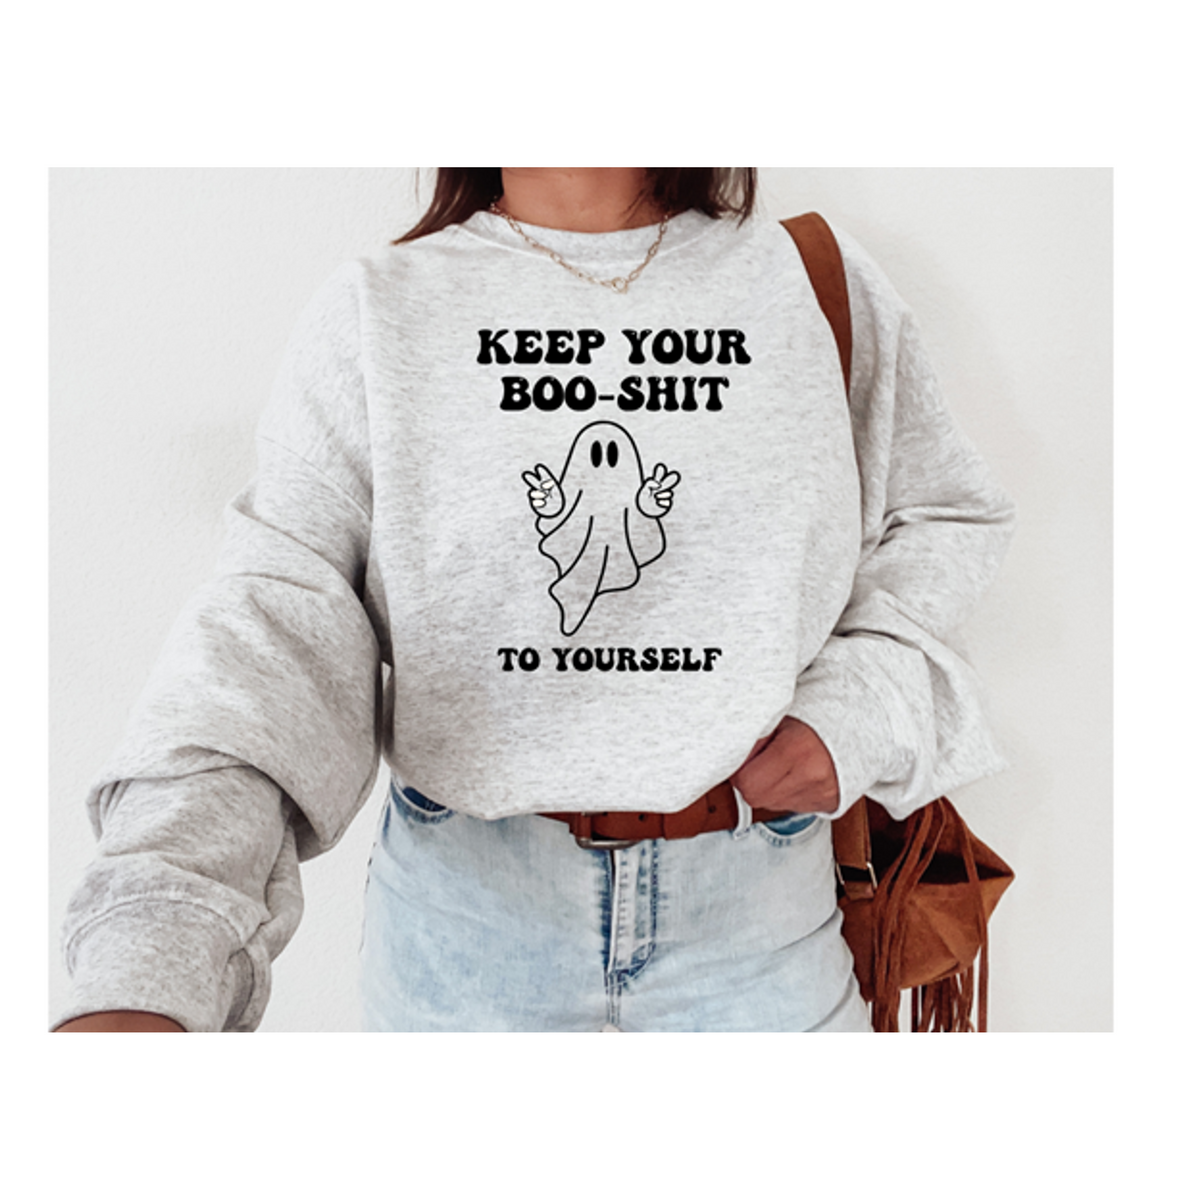 Keep the Boo-Shit to yourself Sweatshirt or Tee